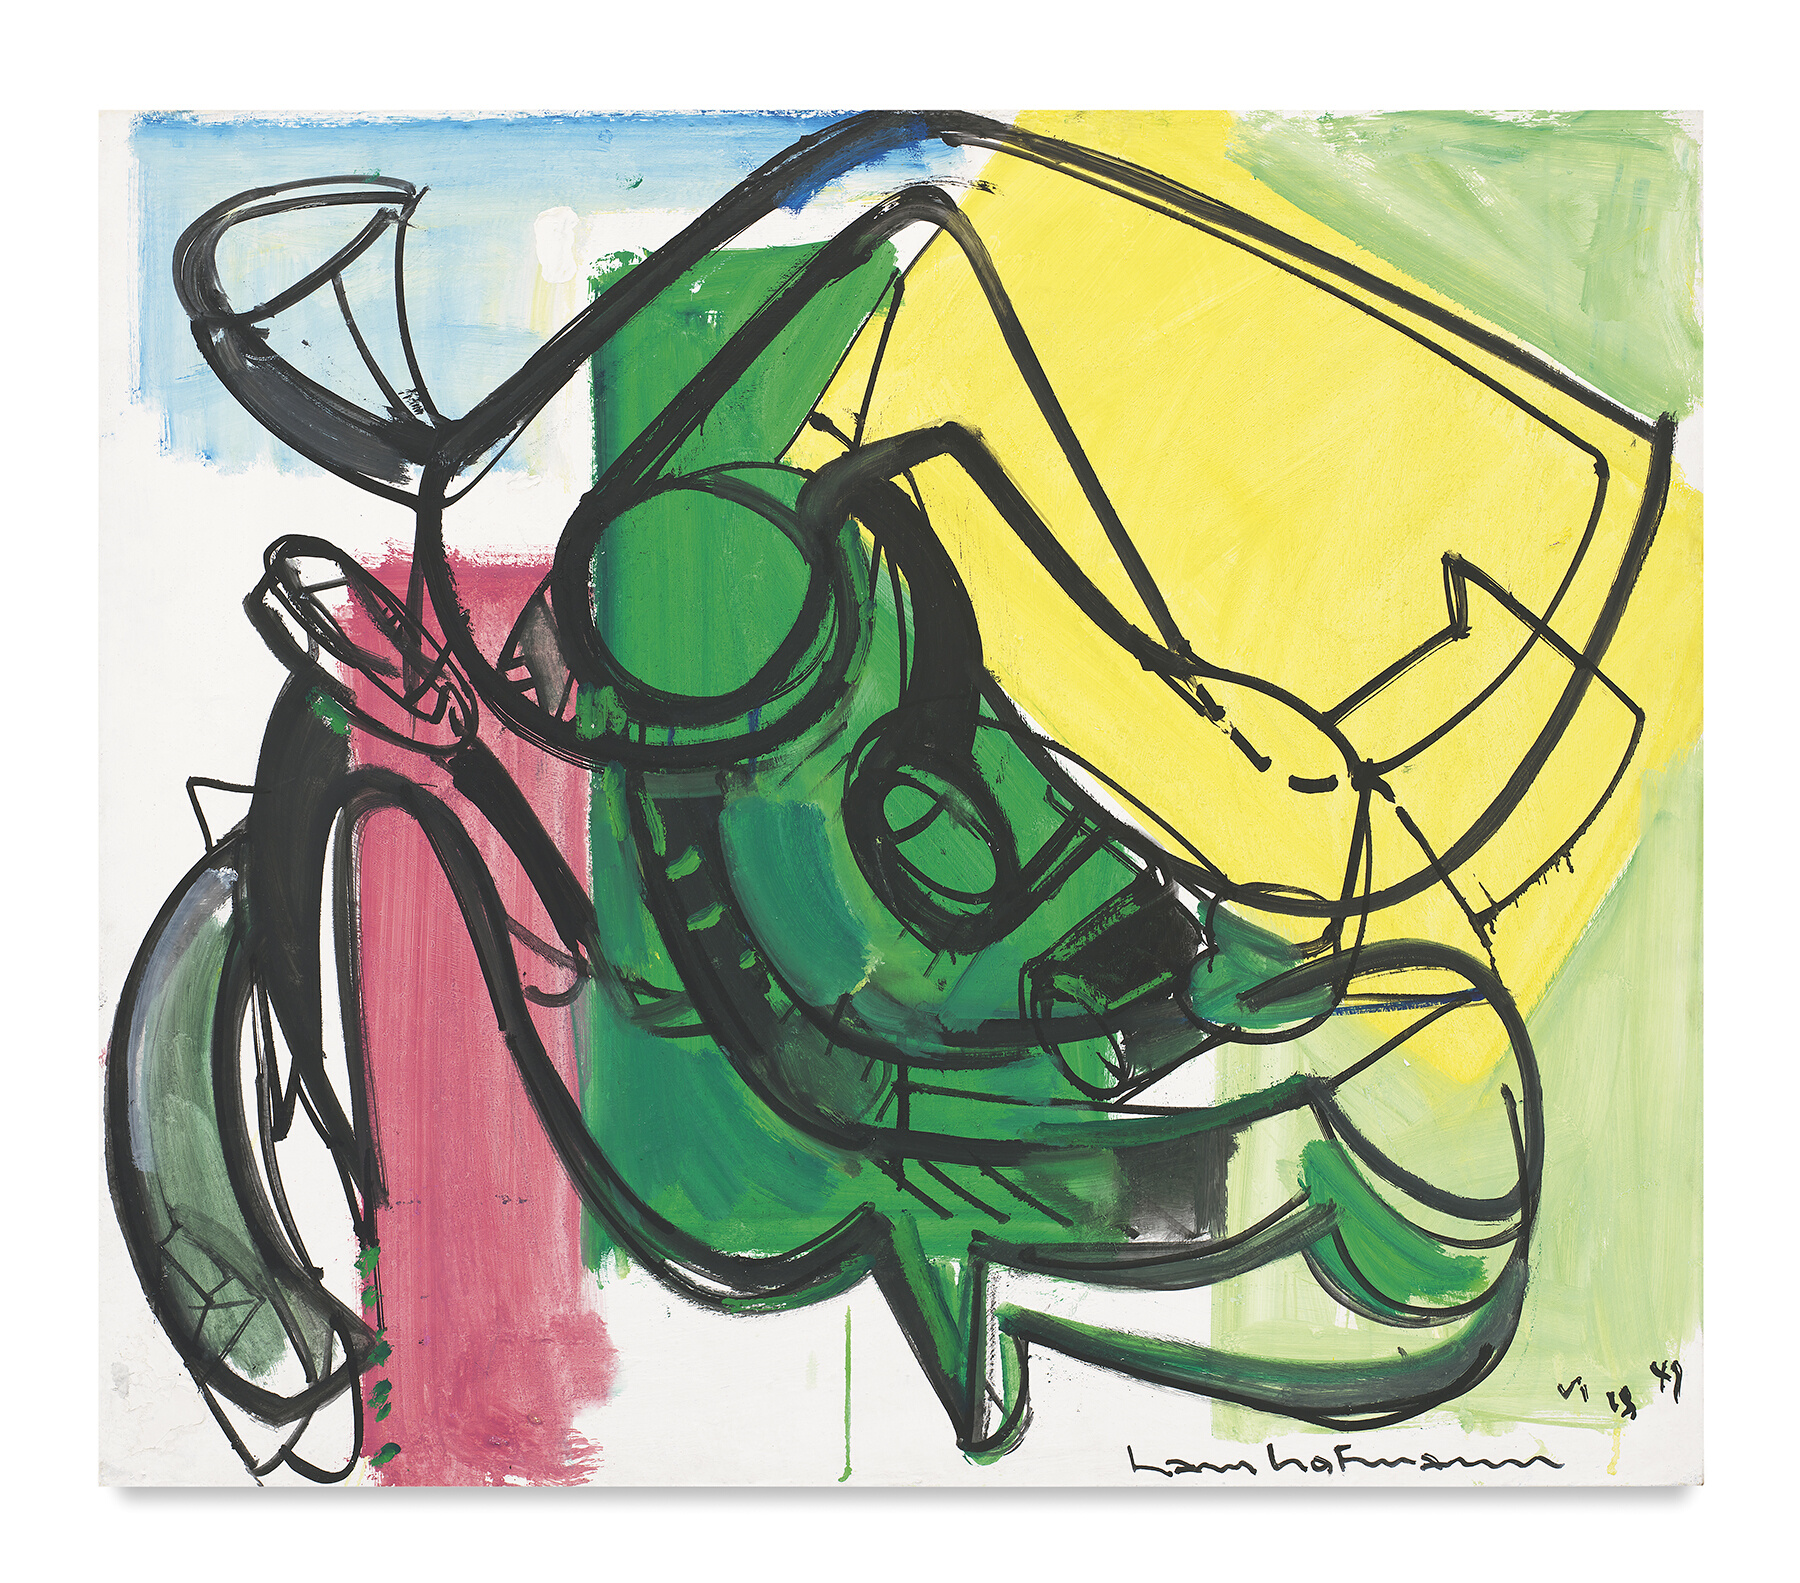 Hans Hofmann (1880-1966) "Yellow Volume", 1947